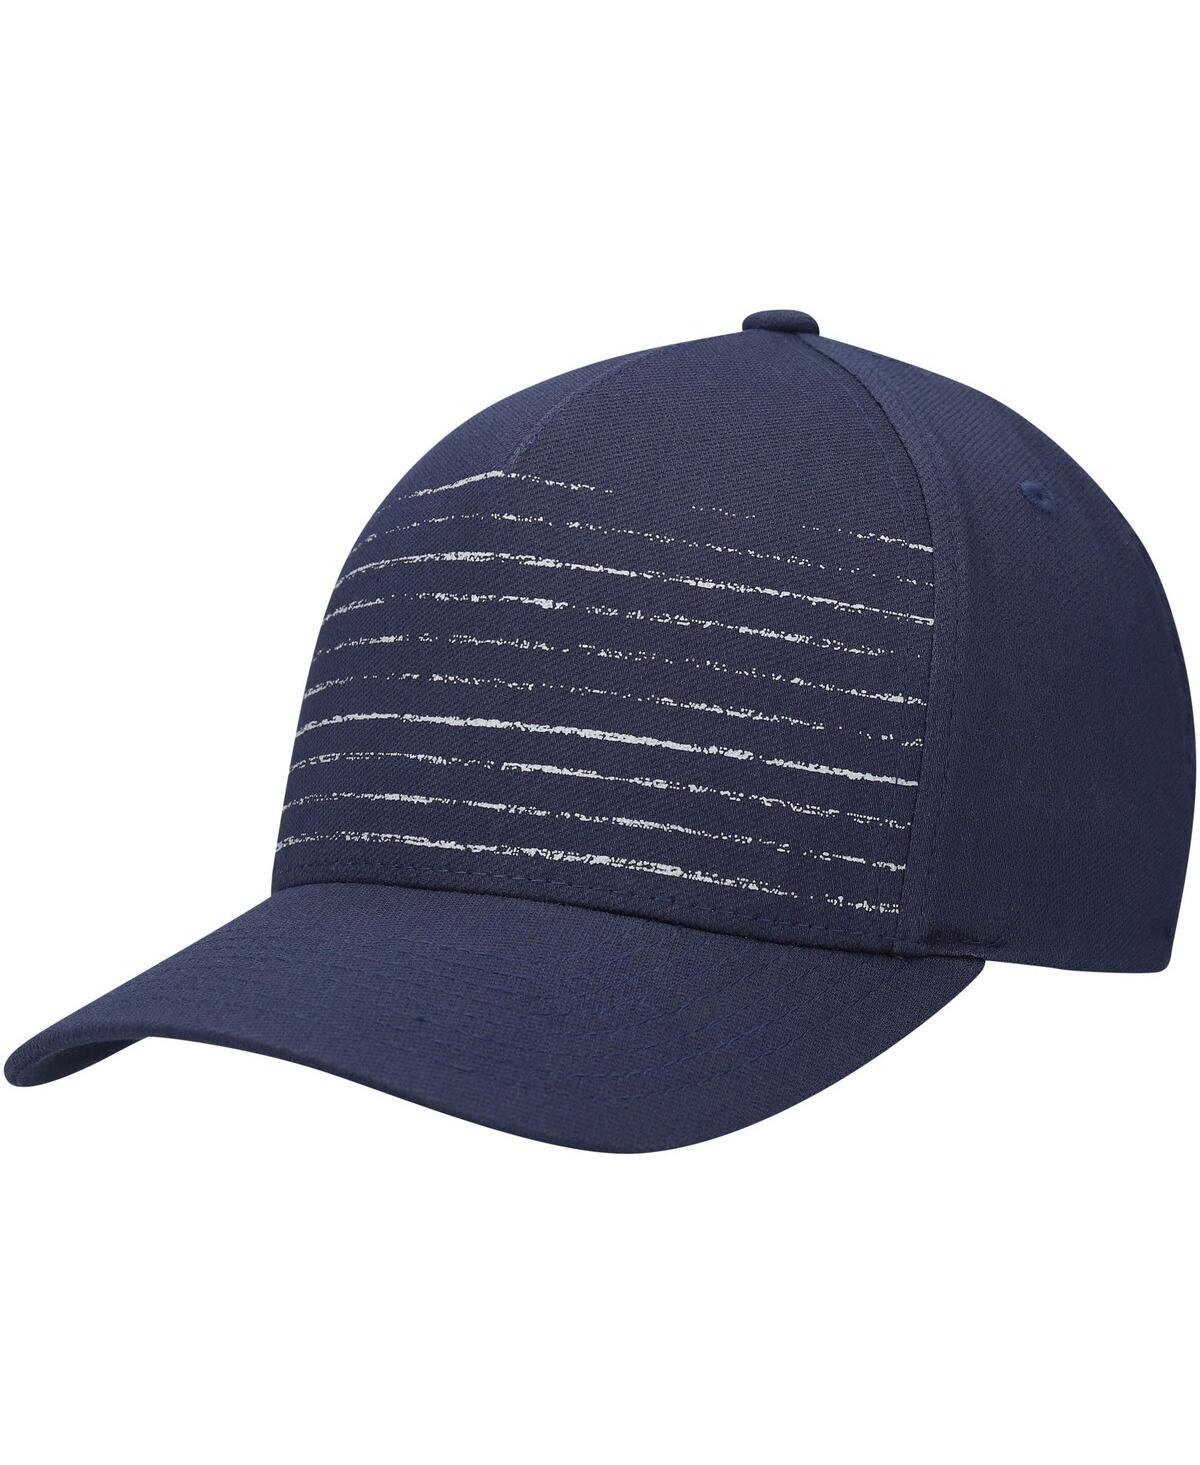 Shop Travis Mathew Men's Travismathew Navy Hot Streak Snapback Hat